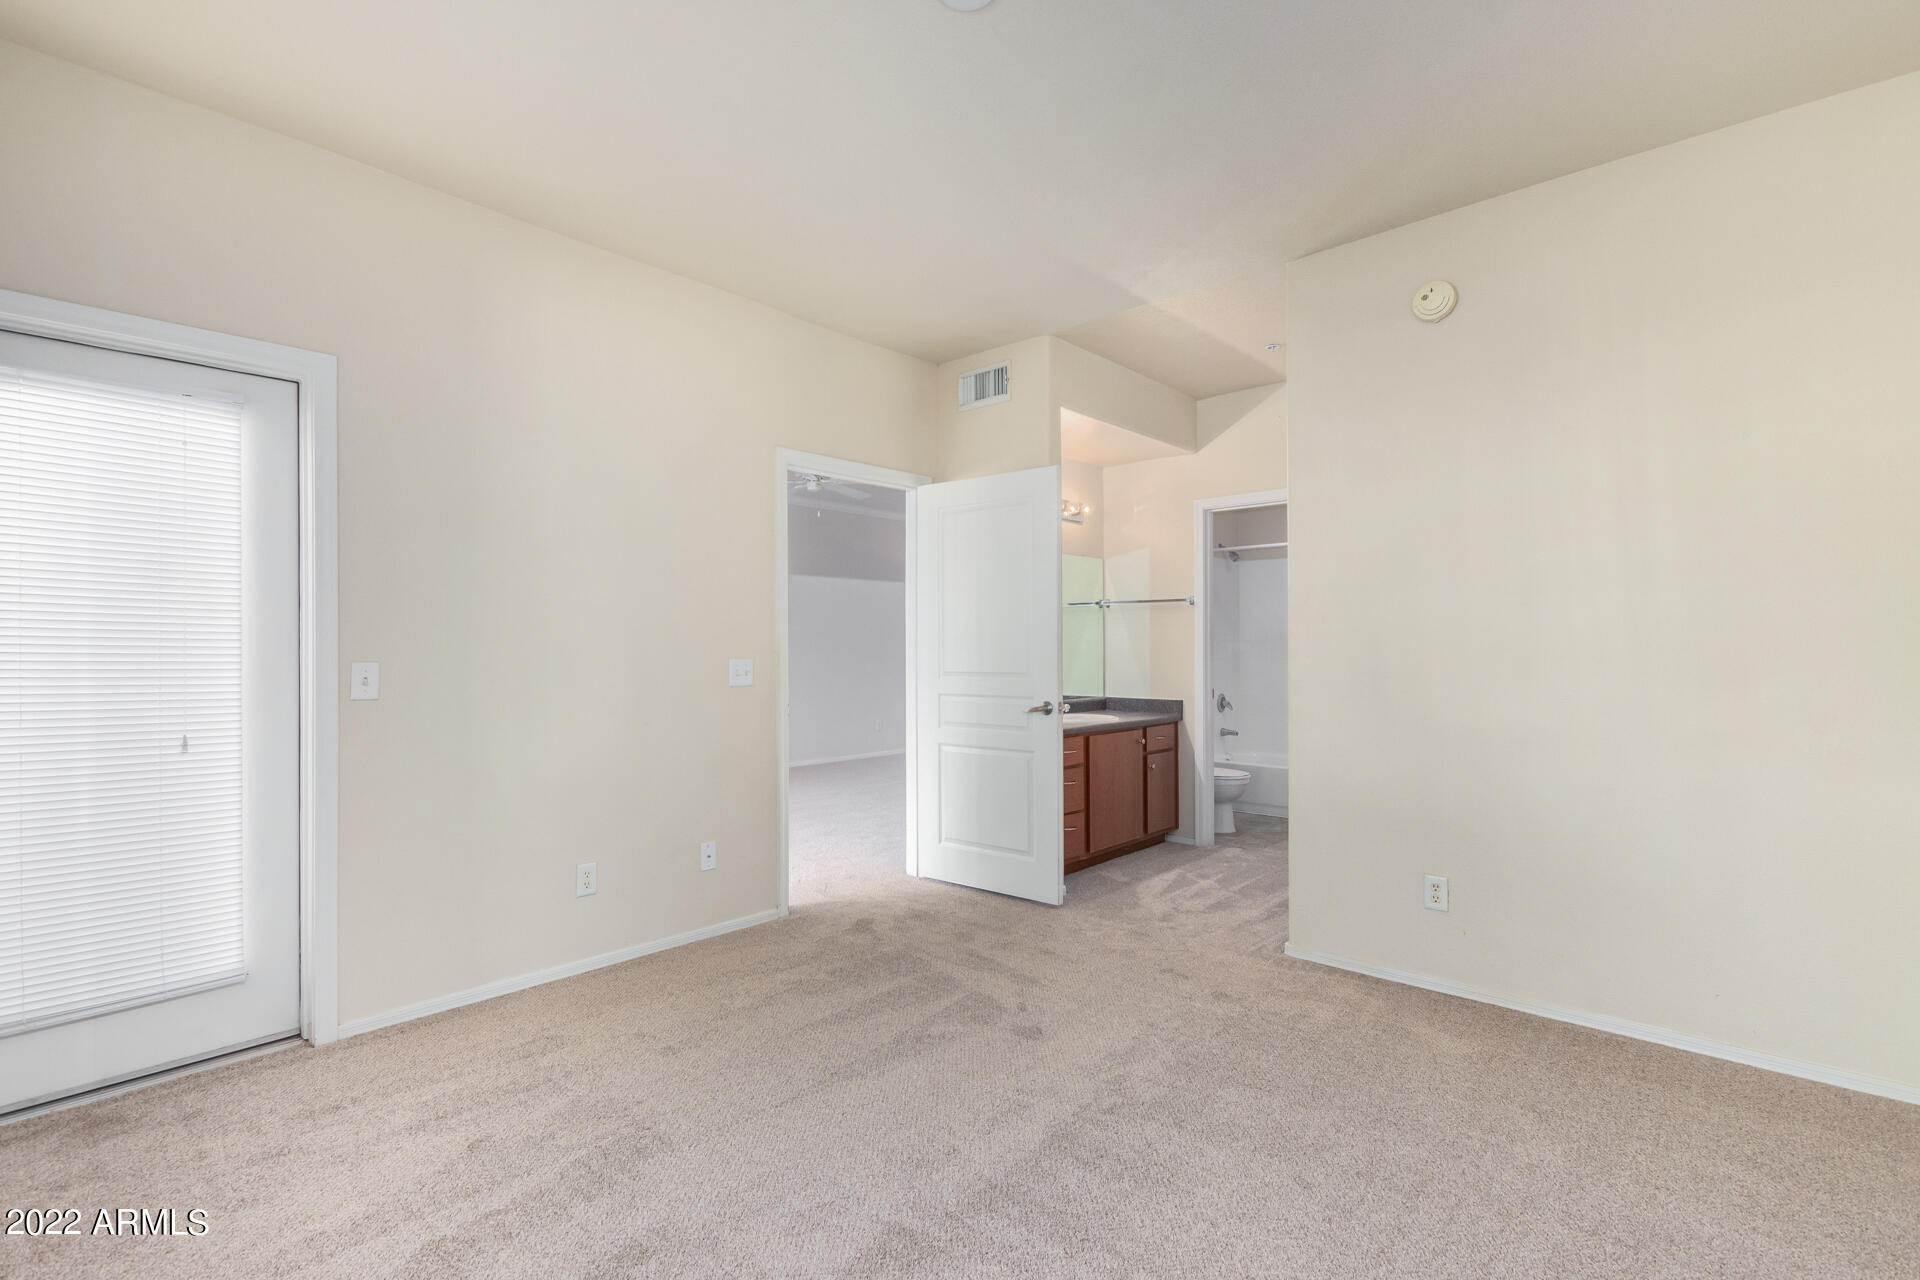 14. Apartment for Sale at Mesa, AZ 85206